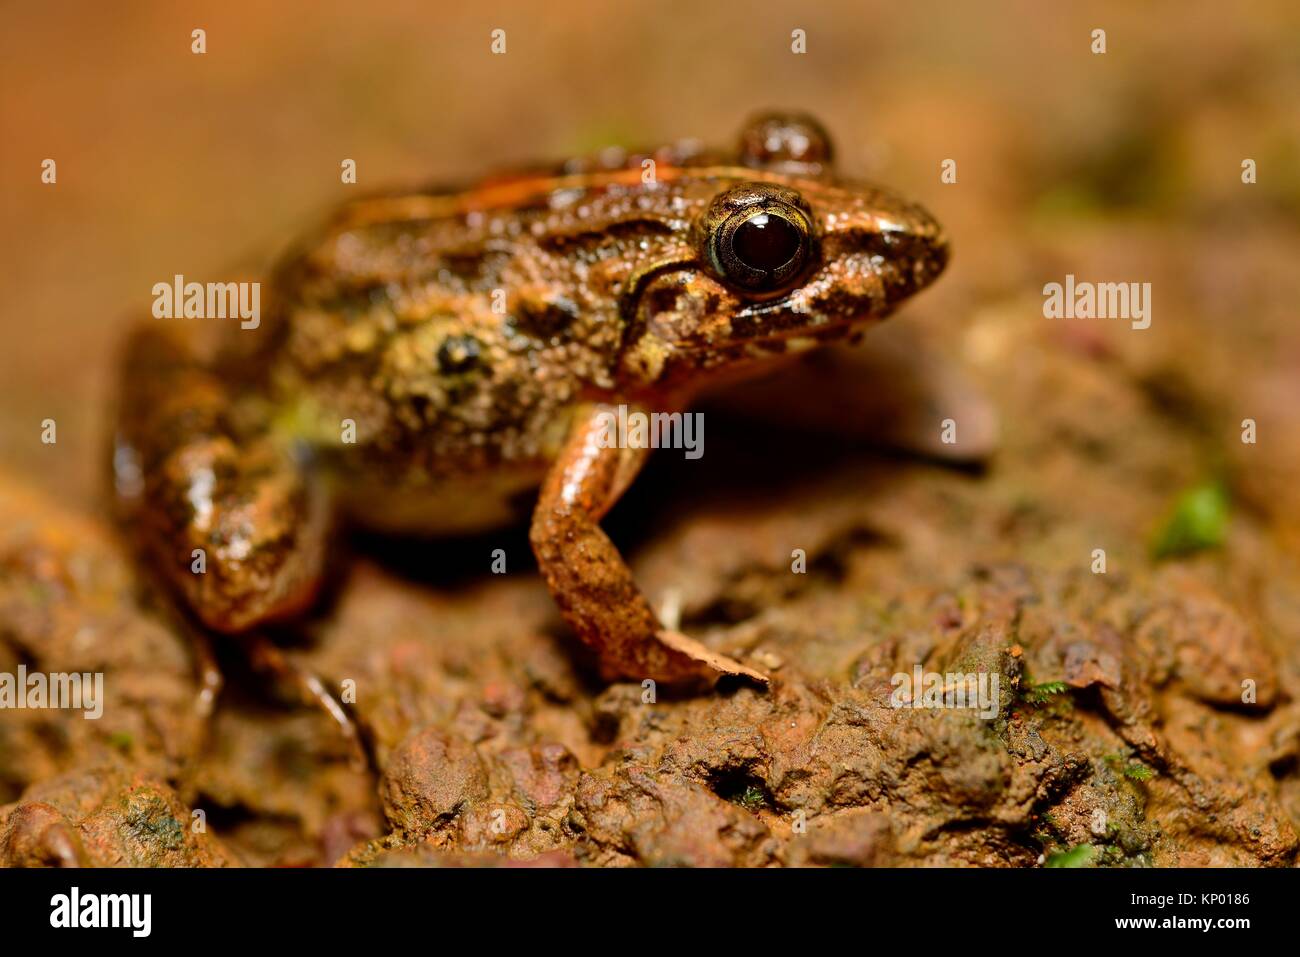 Common frog (Fejervarya keralensis) in Cotigao, Goa, India. Stock Photo